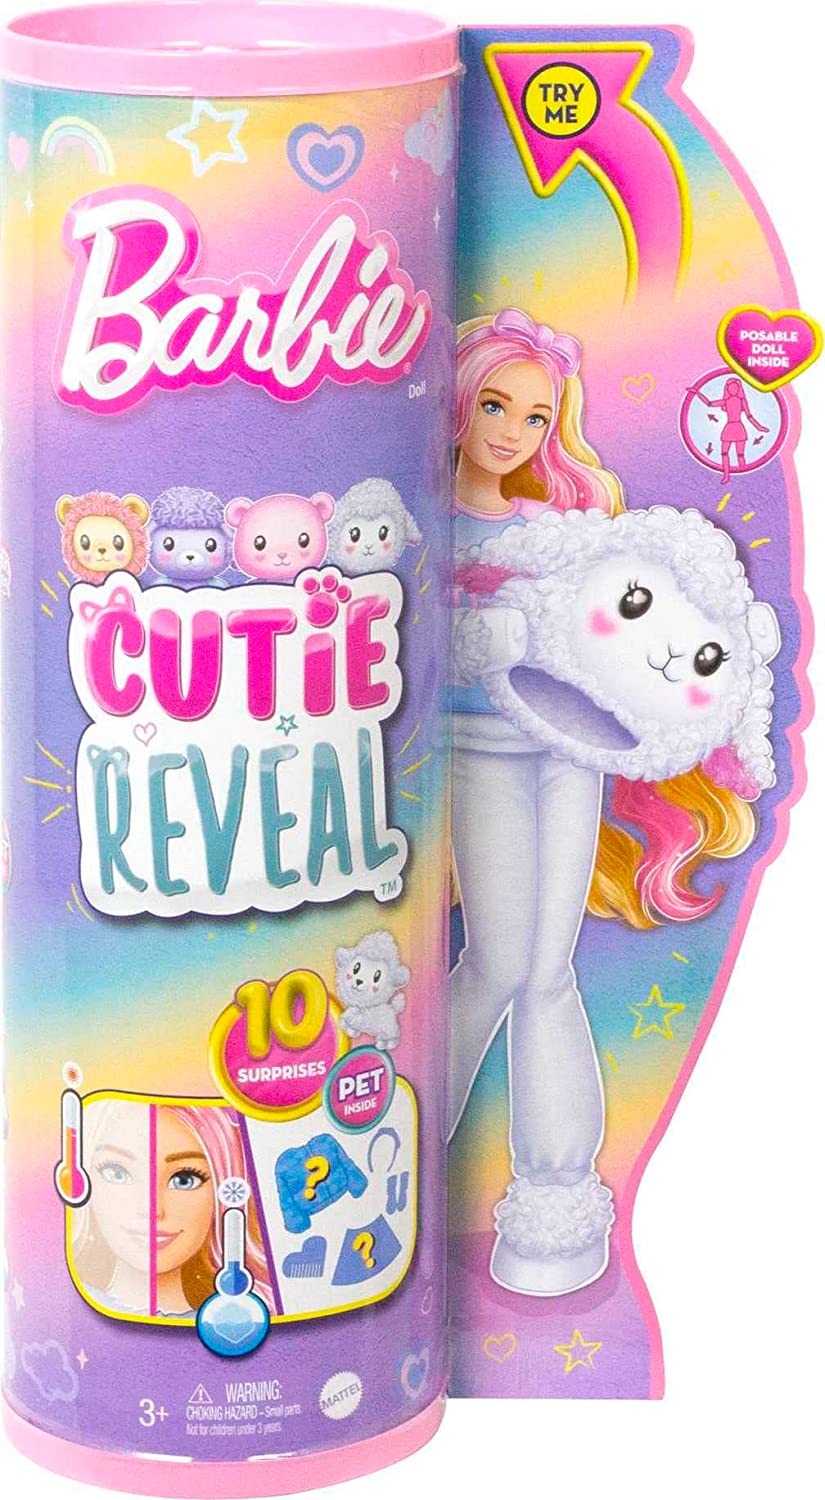 Barbie Cutie Reveal Lamb doll